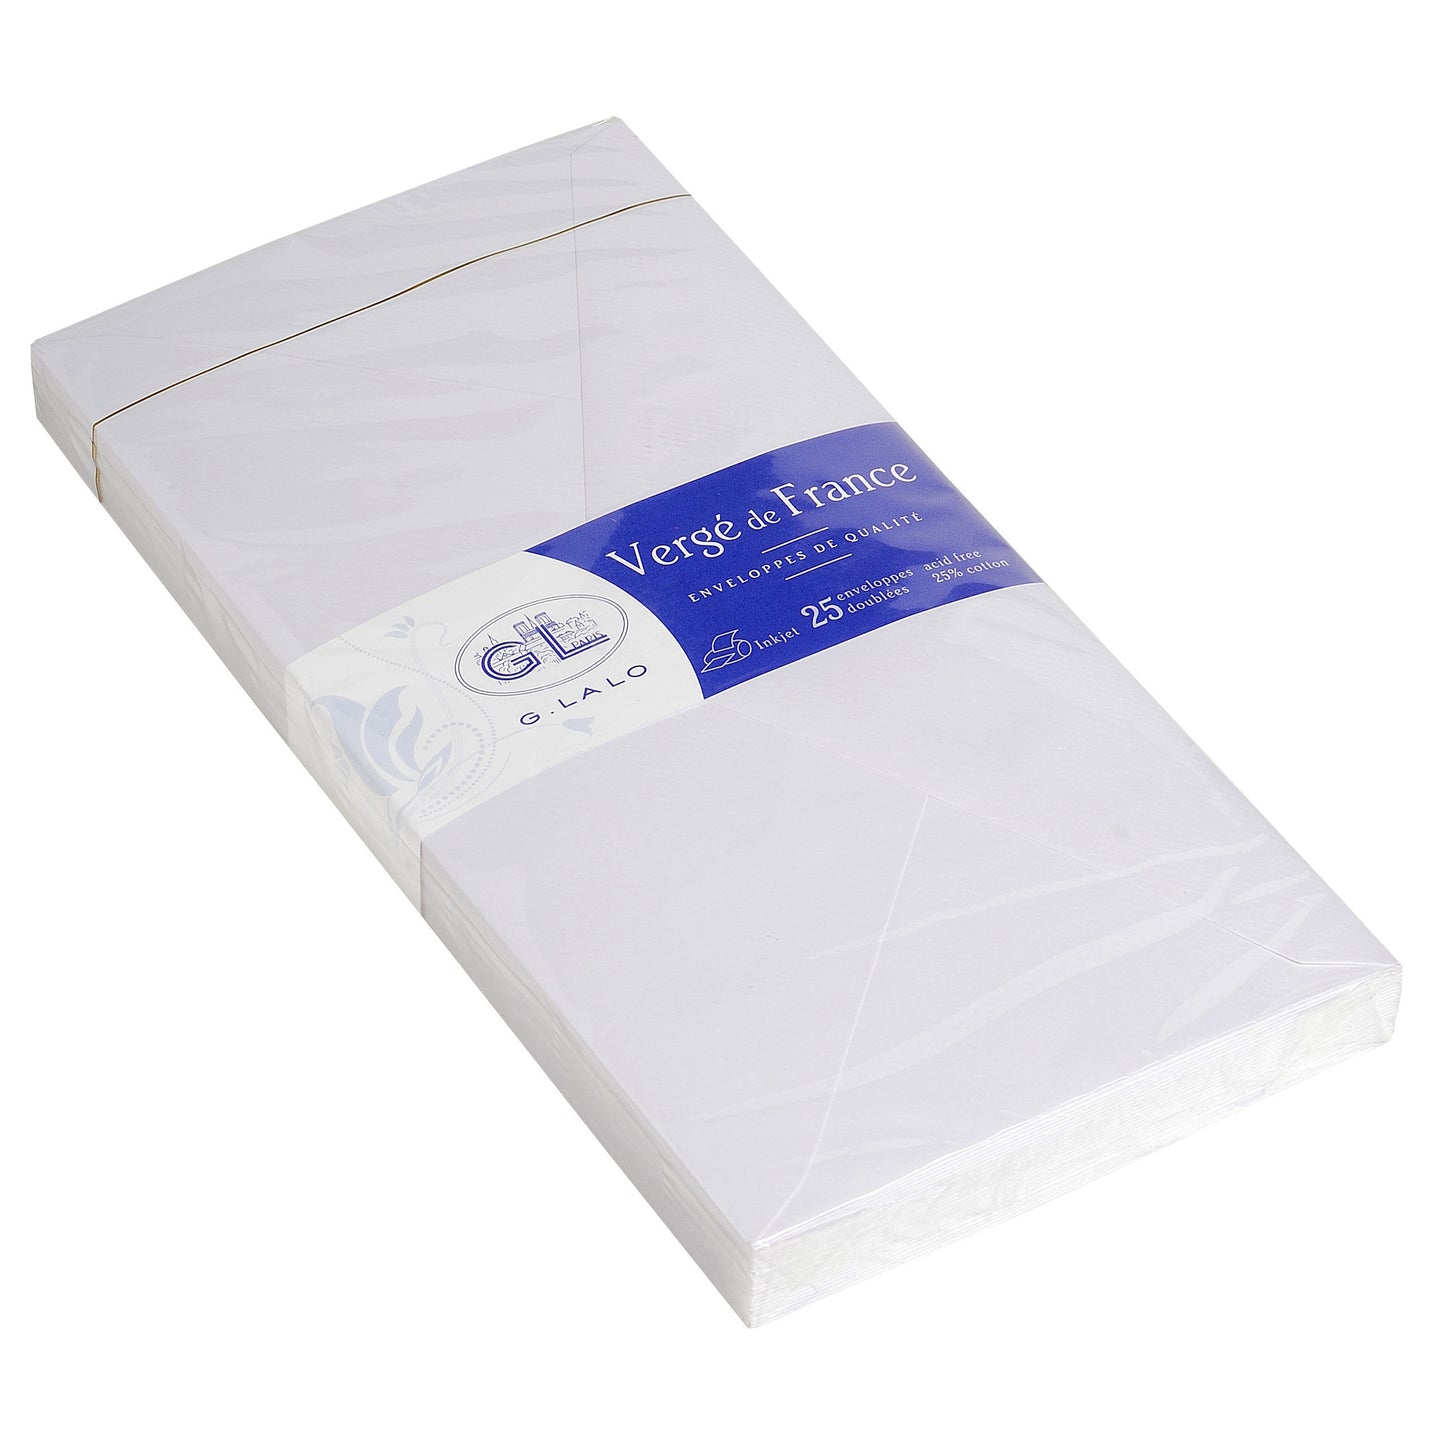 G. Lalo - "Vergé de France" Pack of 25 Envelopes DL Size - Off-white